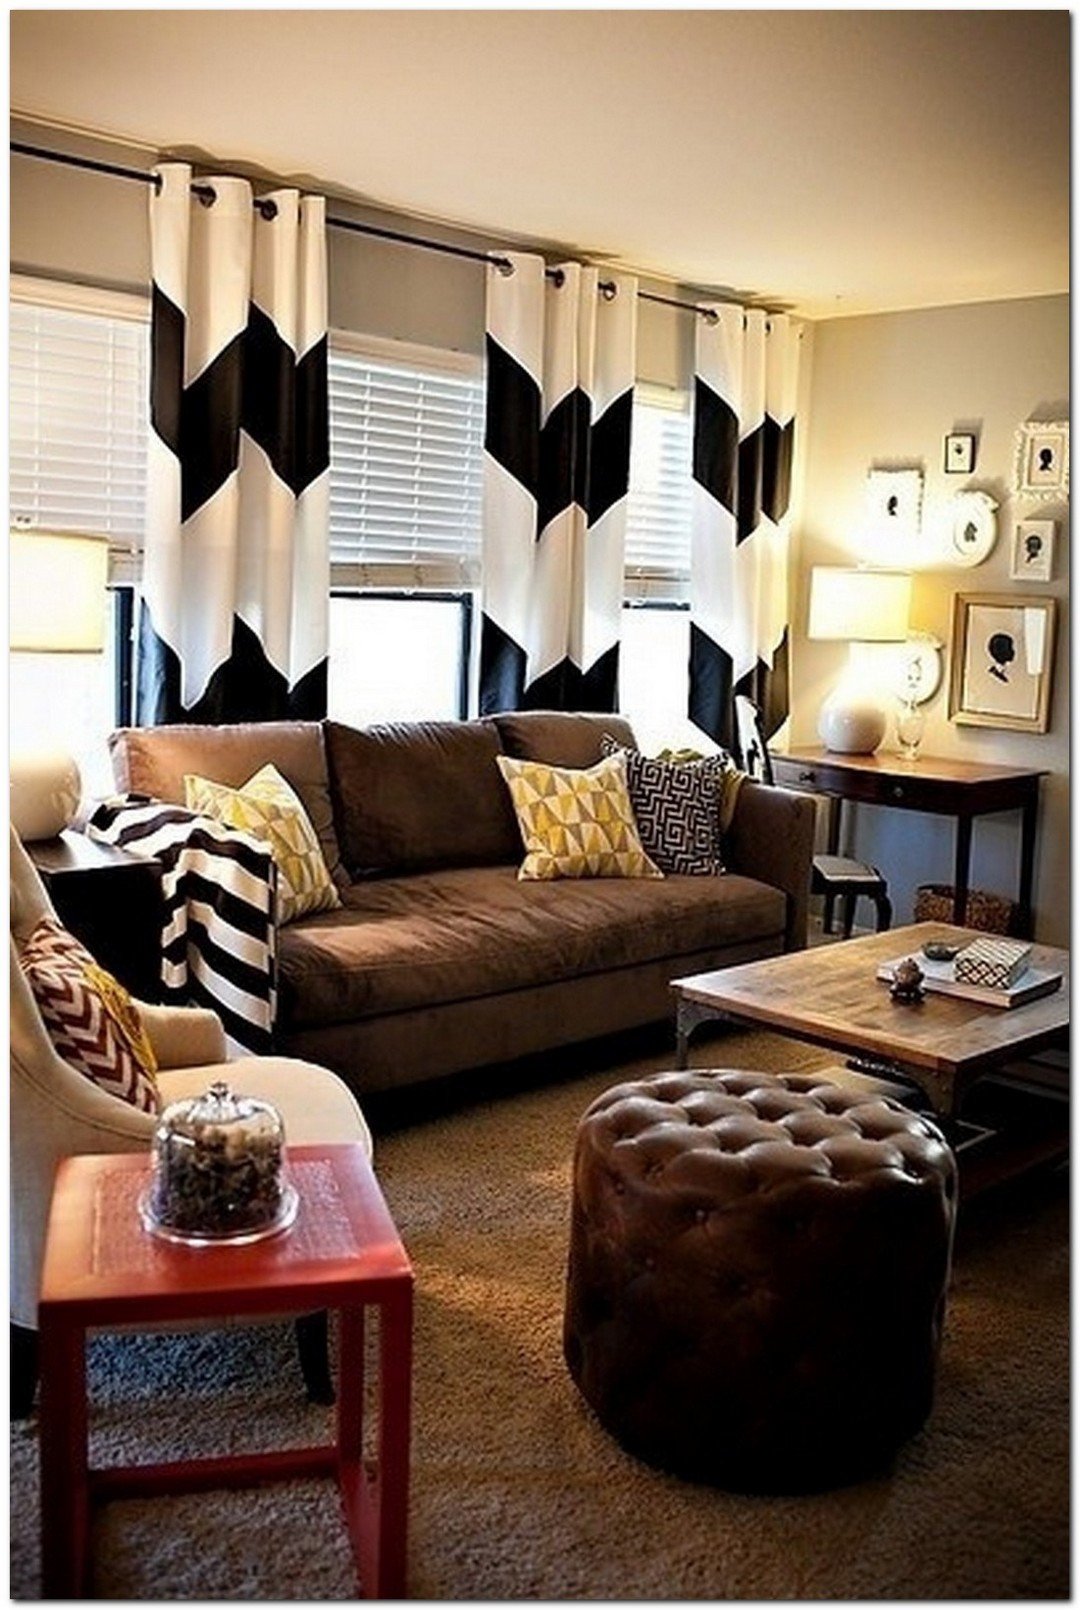 Decor Ideas On A Budget Beautiful Cozy Small Apartment Decorating Ideas A Bud 4 De Agz